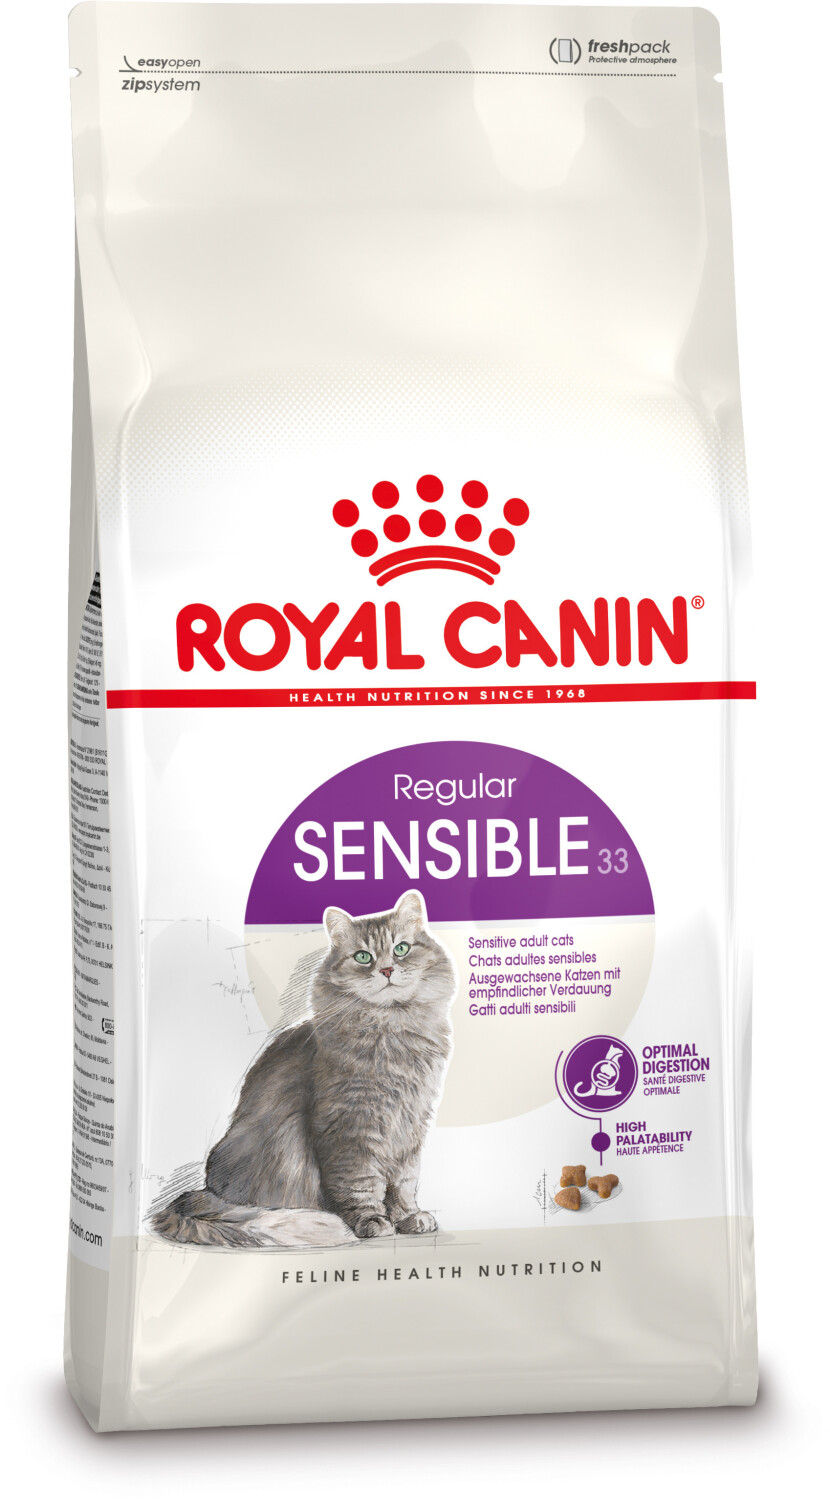 Royal Canin Feline Health Nutrition Regular Sensible 33 dry food 4kg